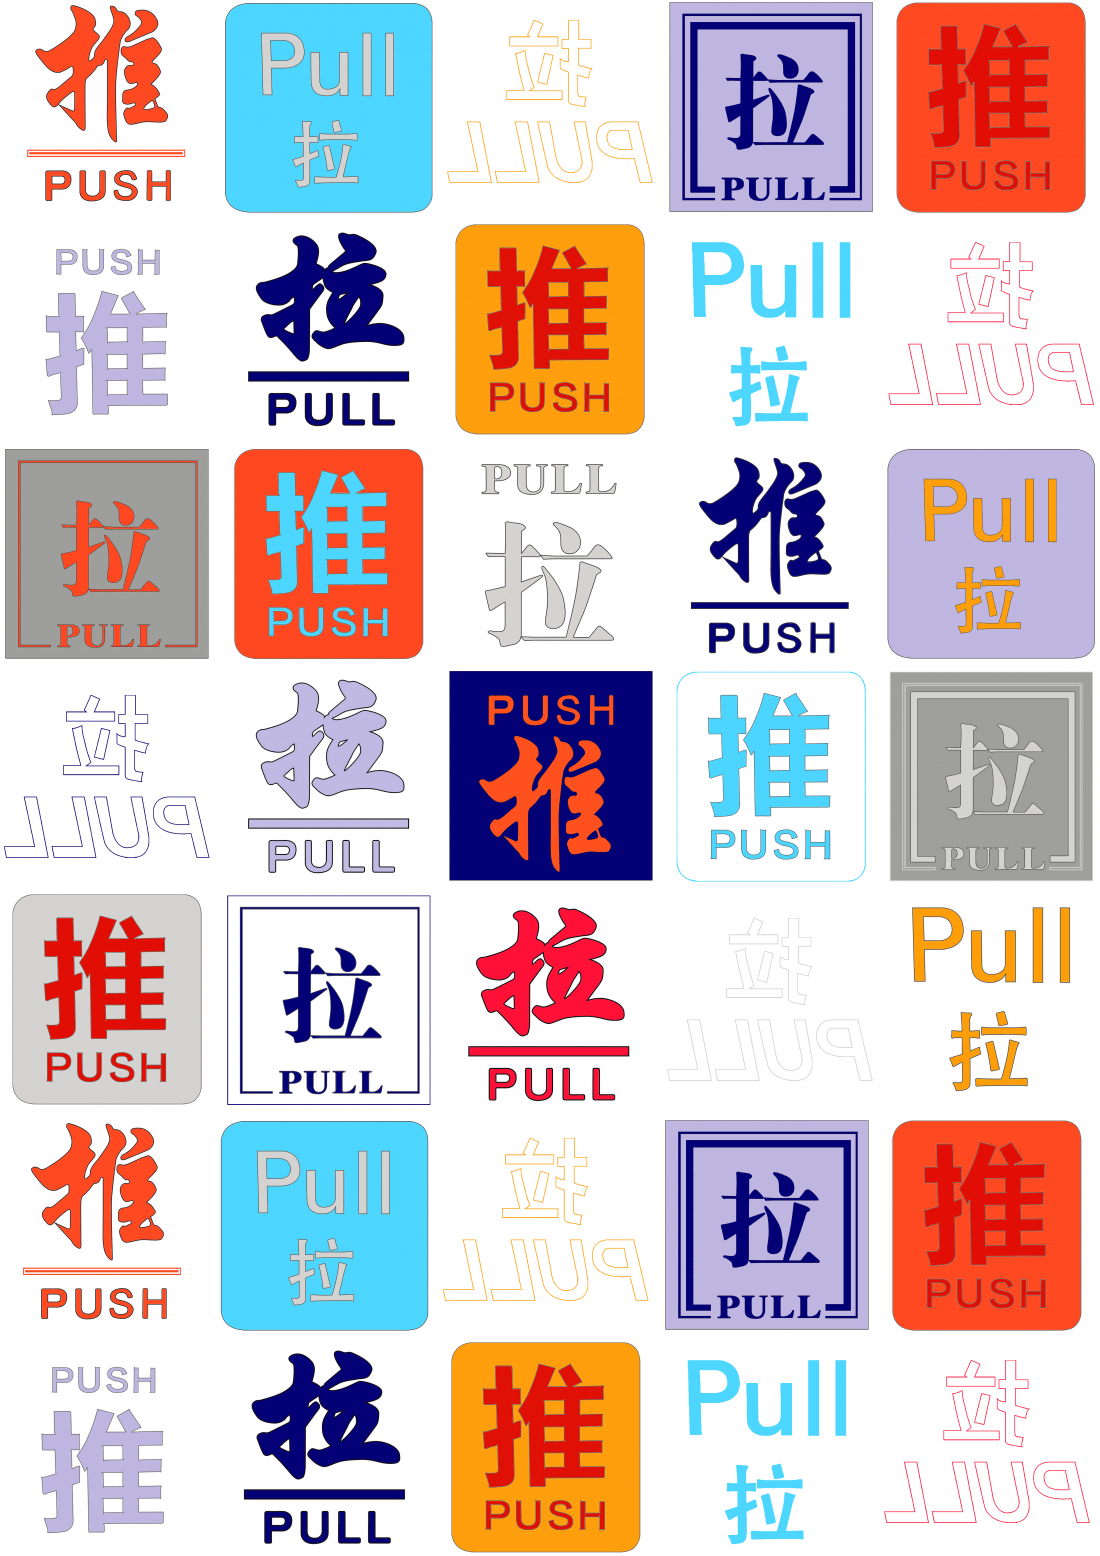 PUSH//PULL